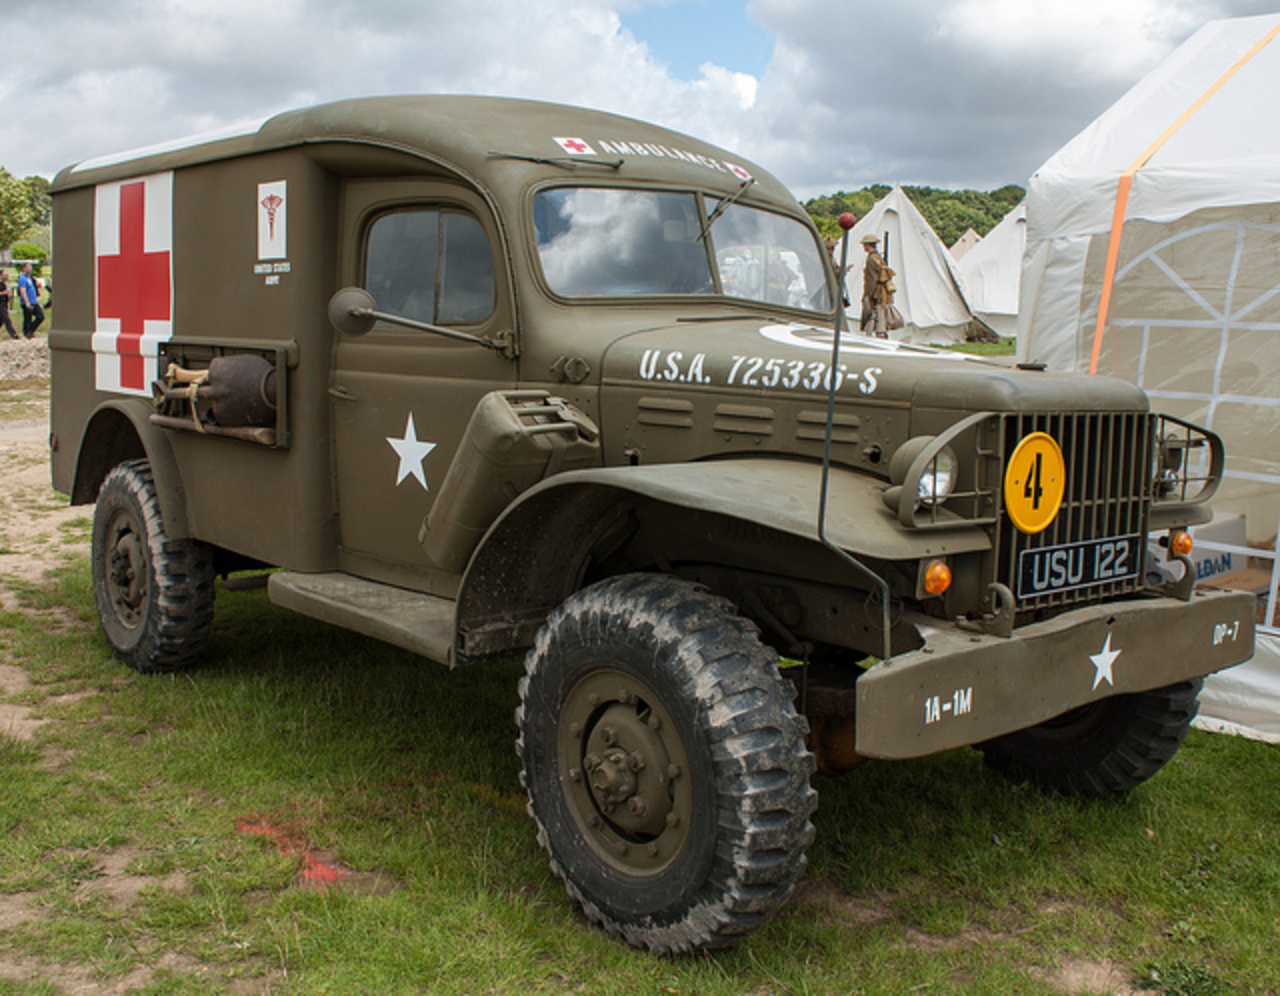 Flickr: Le pool Dodge Power Wagon et Camions Militaires